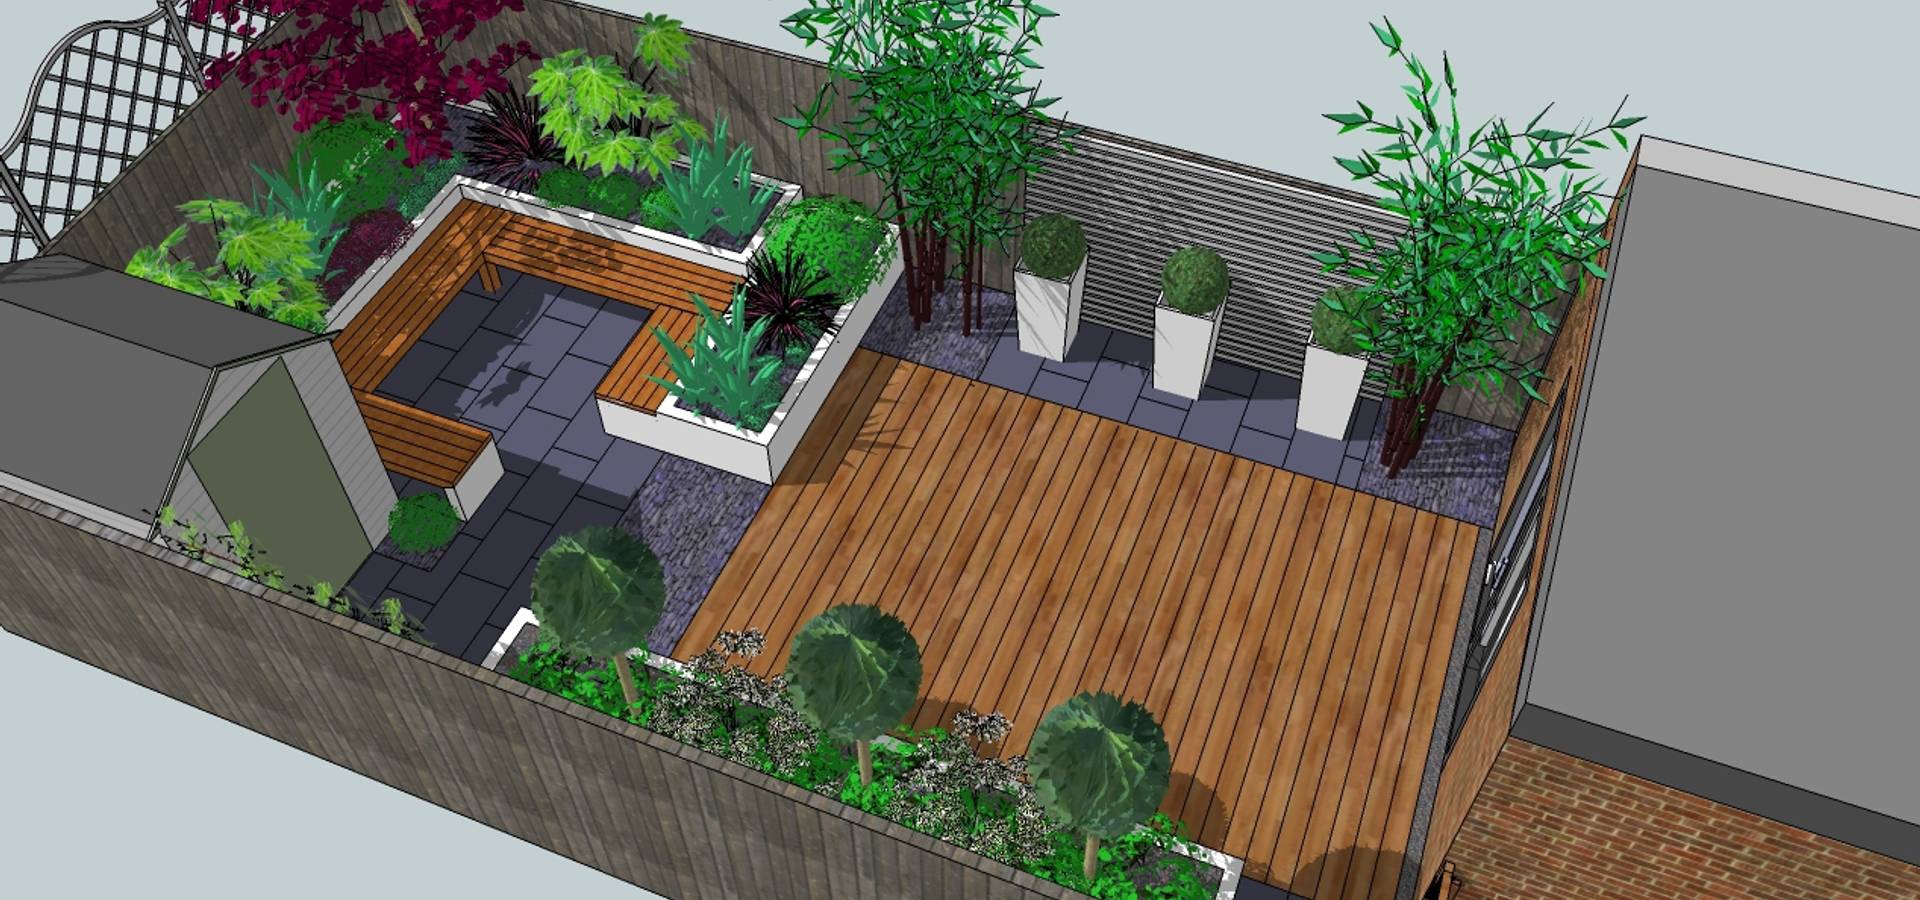 Bea Ray Garden Design Ltd Gartenzubehör in Penrith   homify